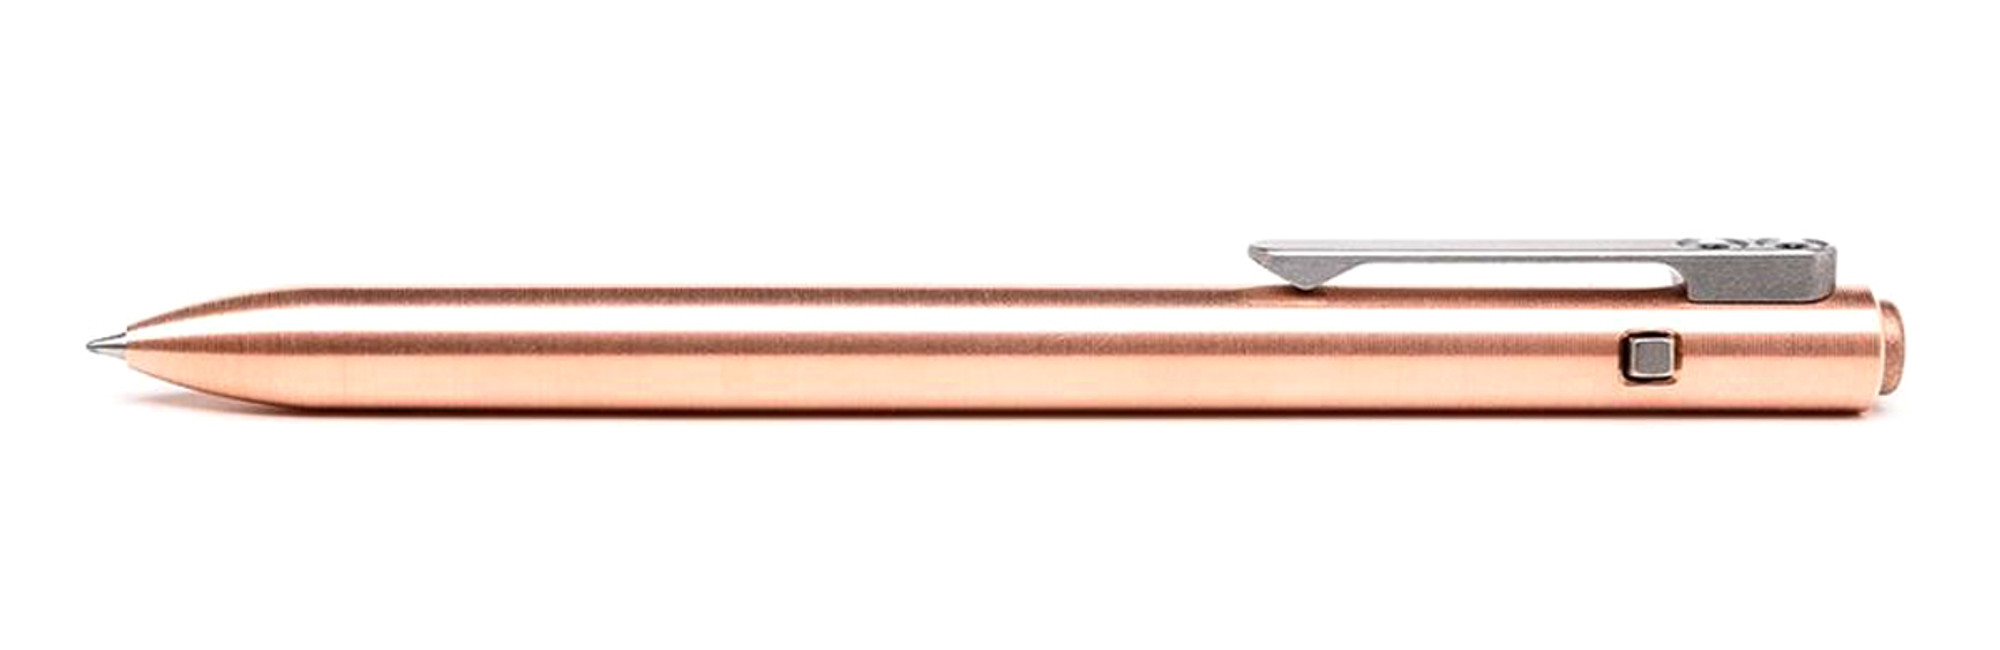 Tactile Turn Side Click Standard - Copper